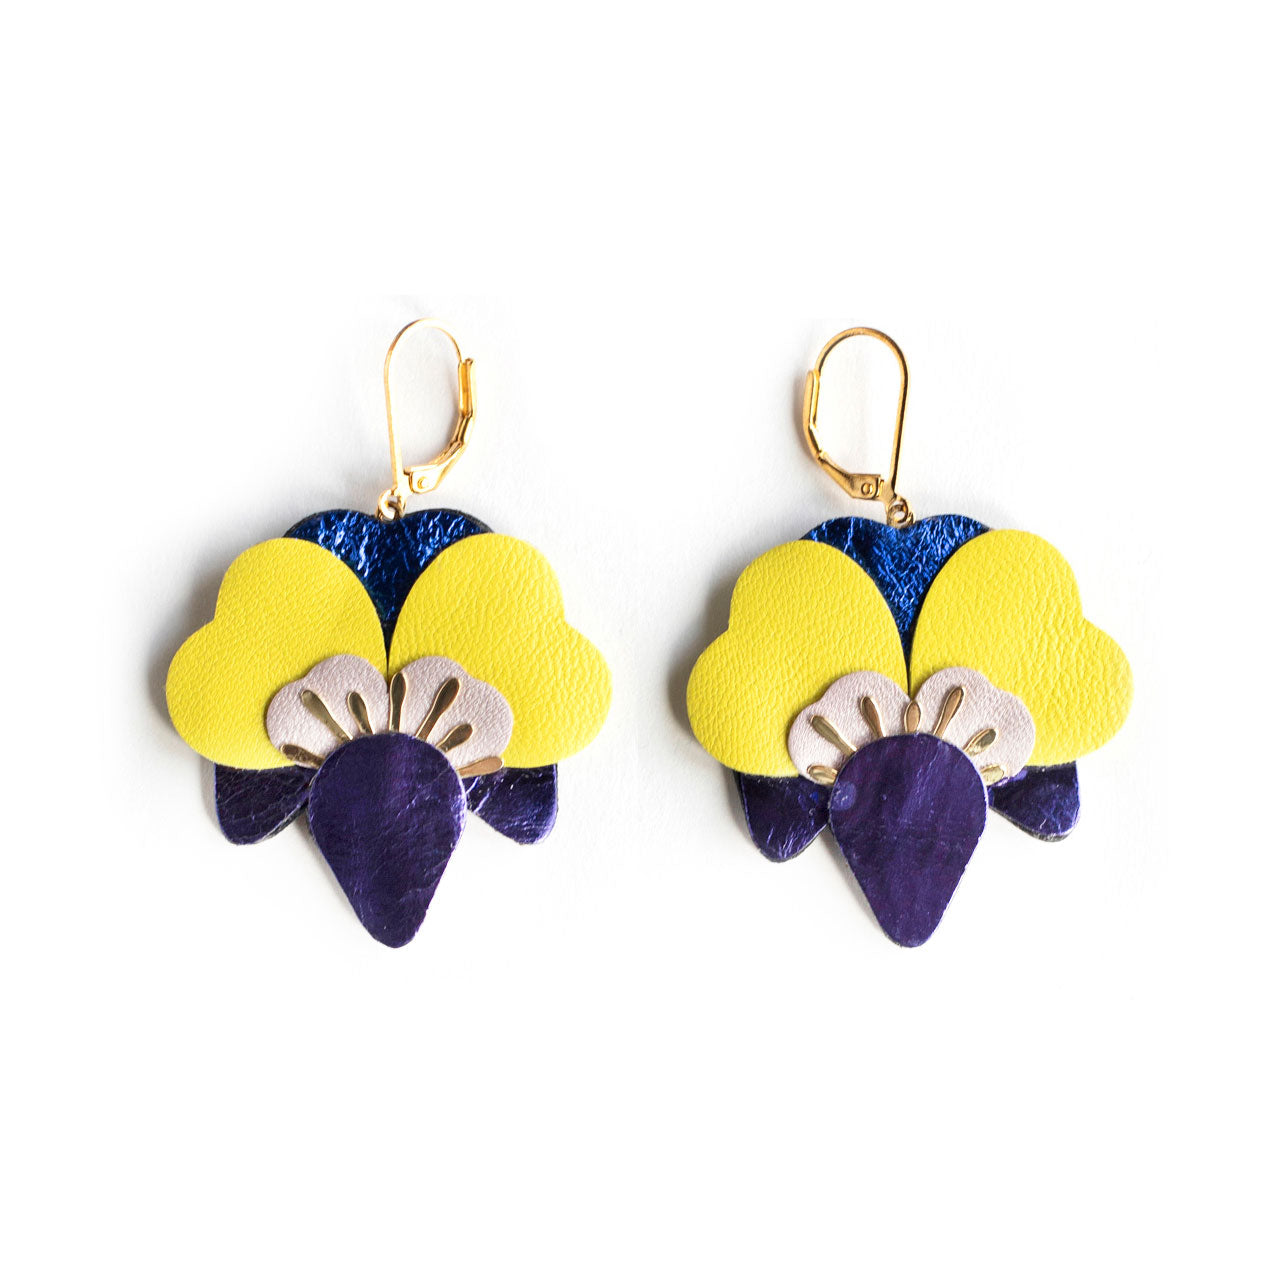 Orchid earrings - purple, mauve, yellow blue